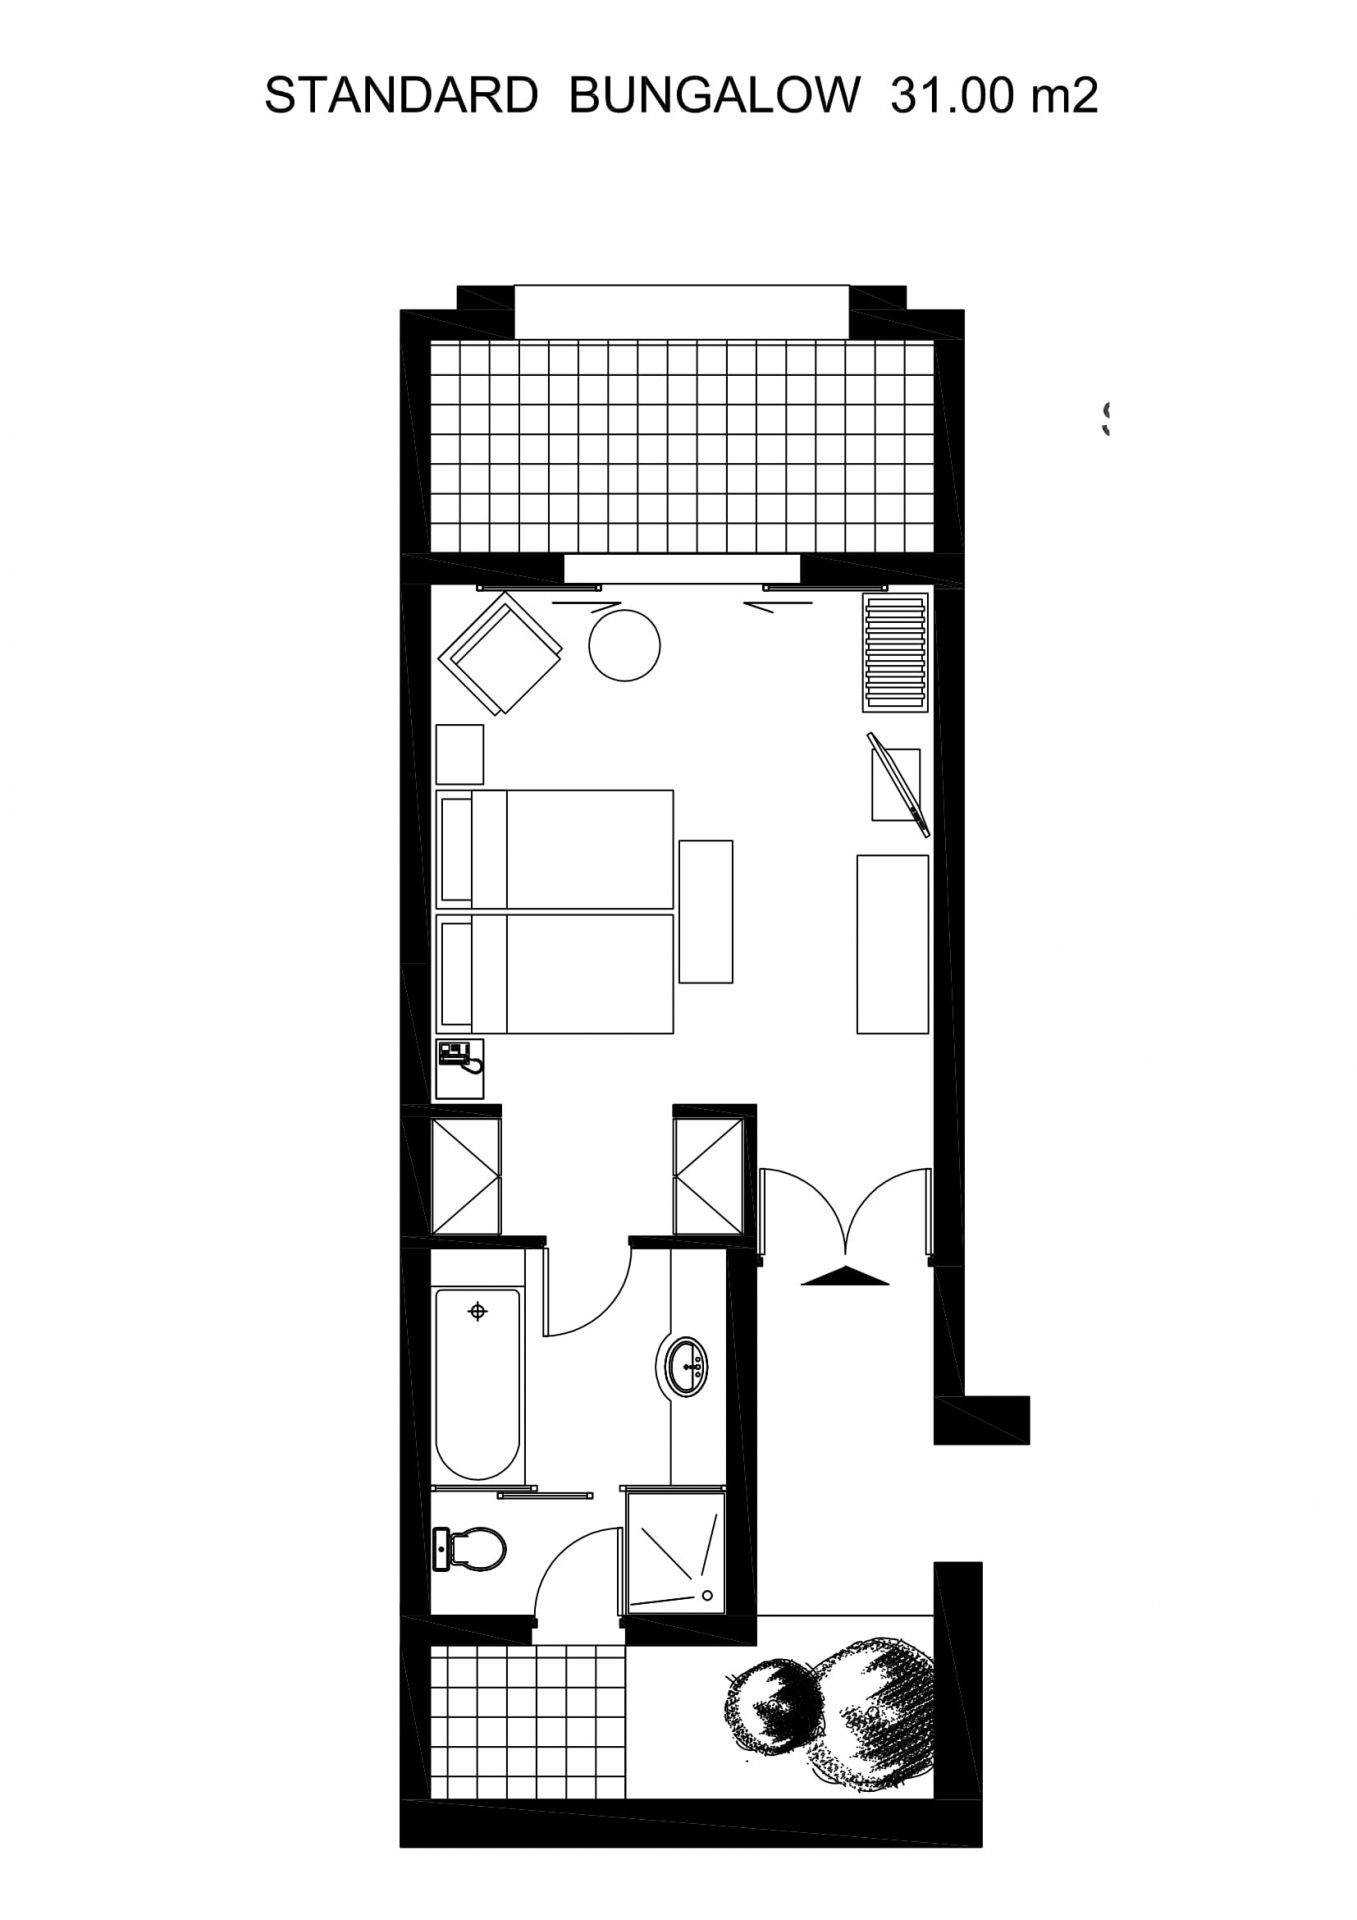 standard bungalow floorplan 1